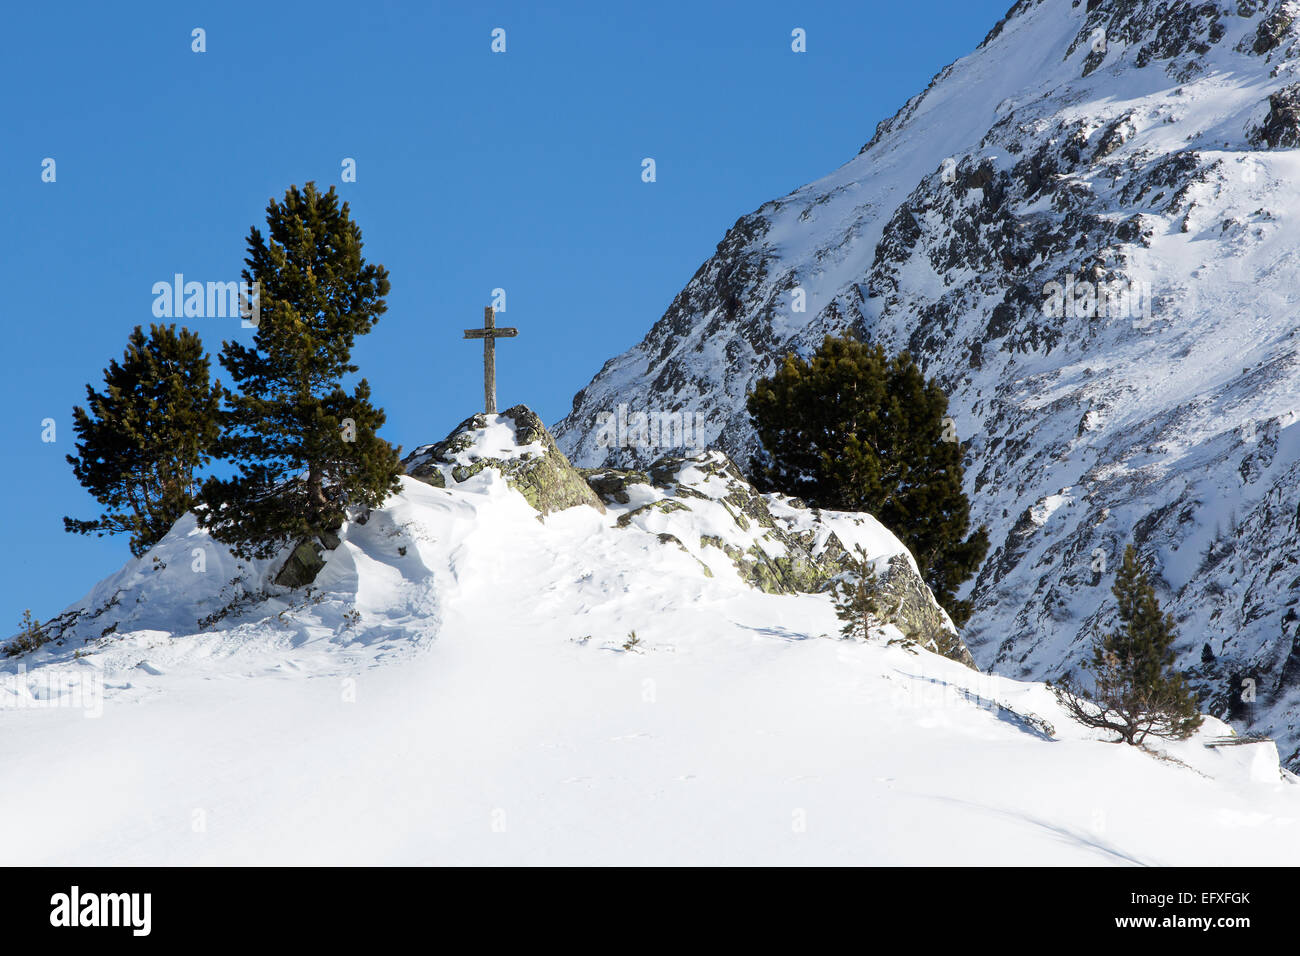 Cross in snowy mountain landscape of the Austrian Alps Stock Photo